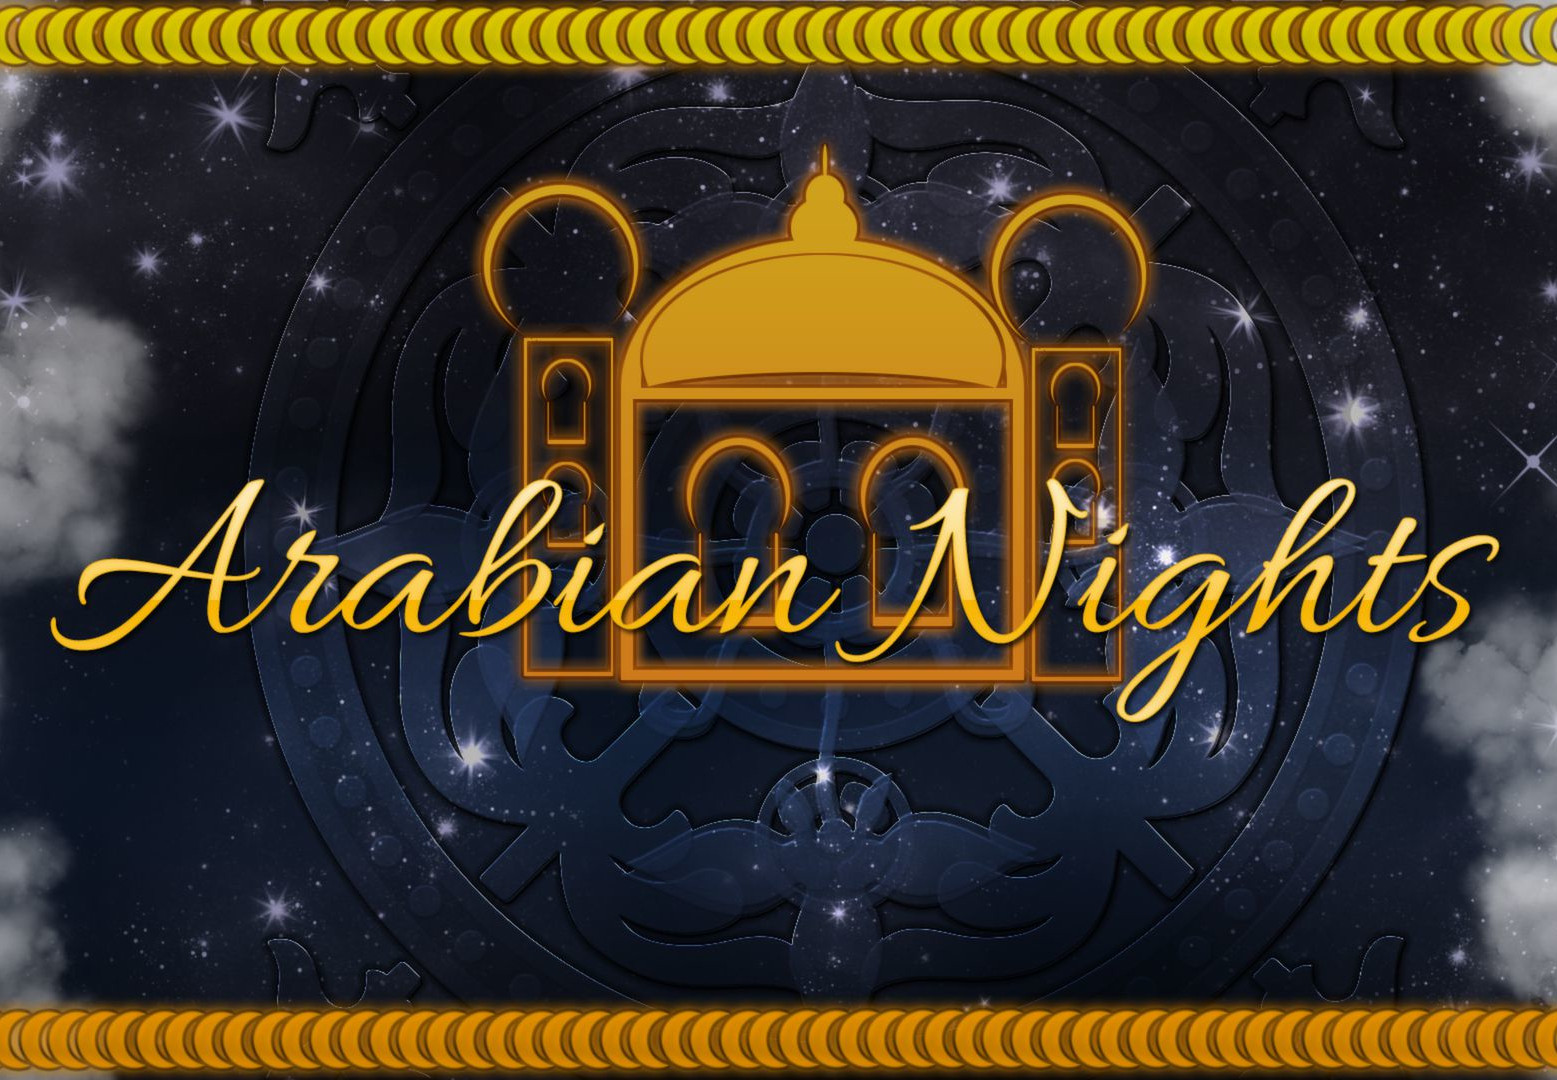 RPG Maker VX Ace - Arabian Nights DLC Steam CD Key